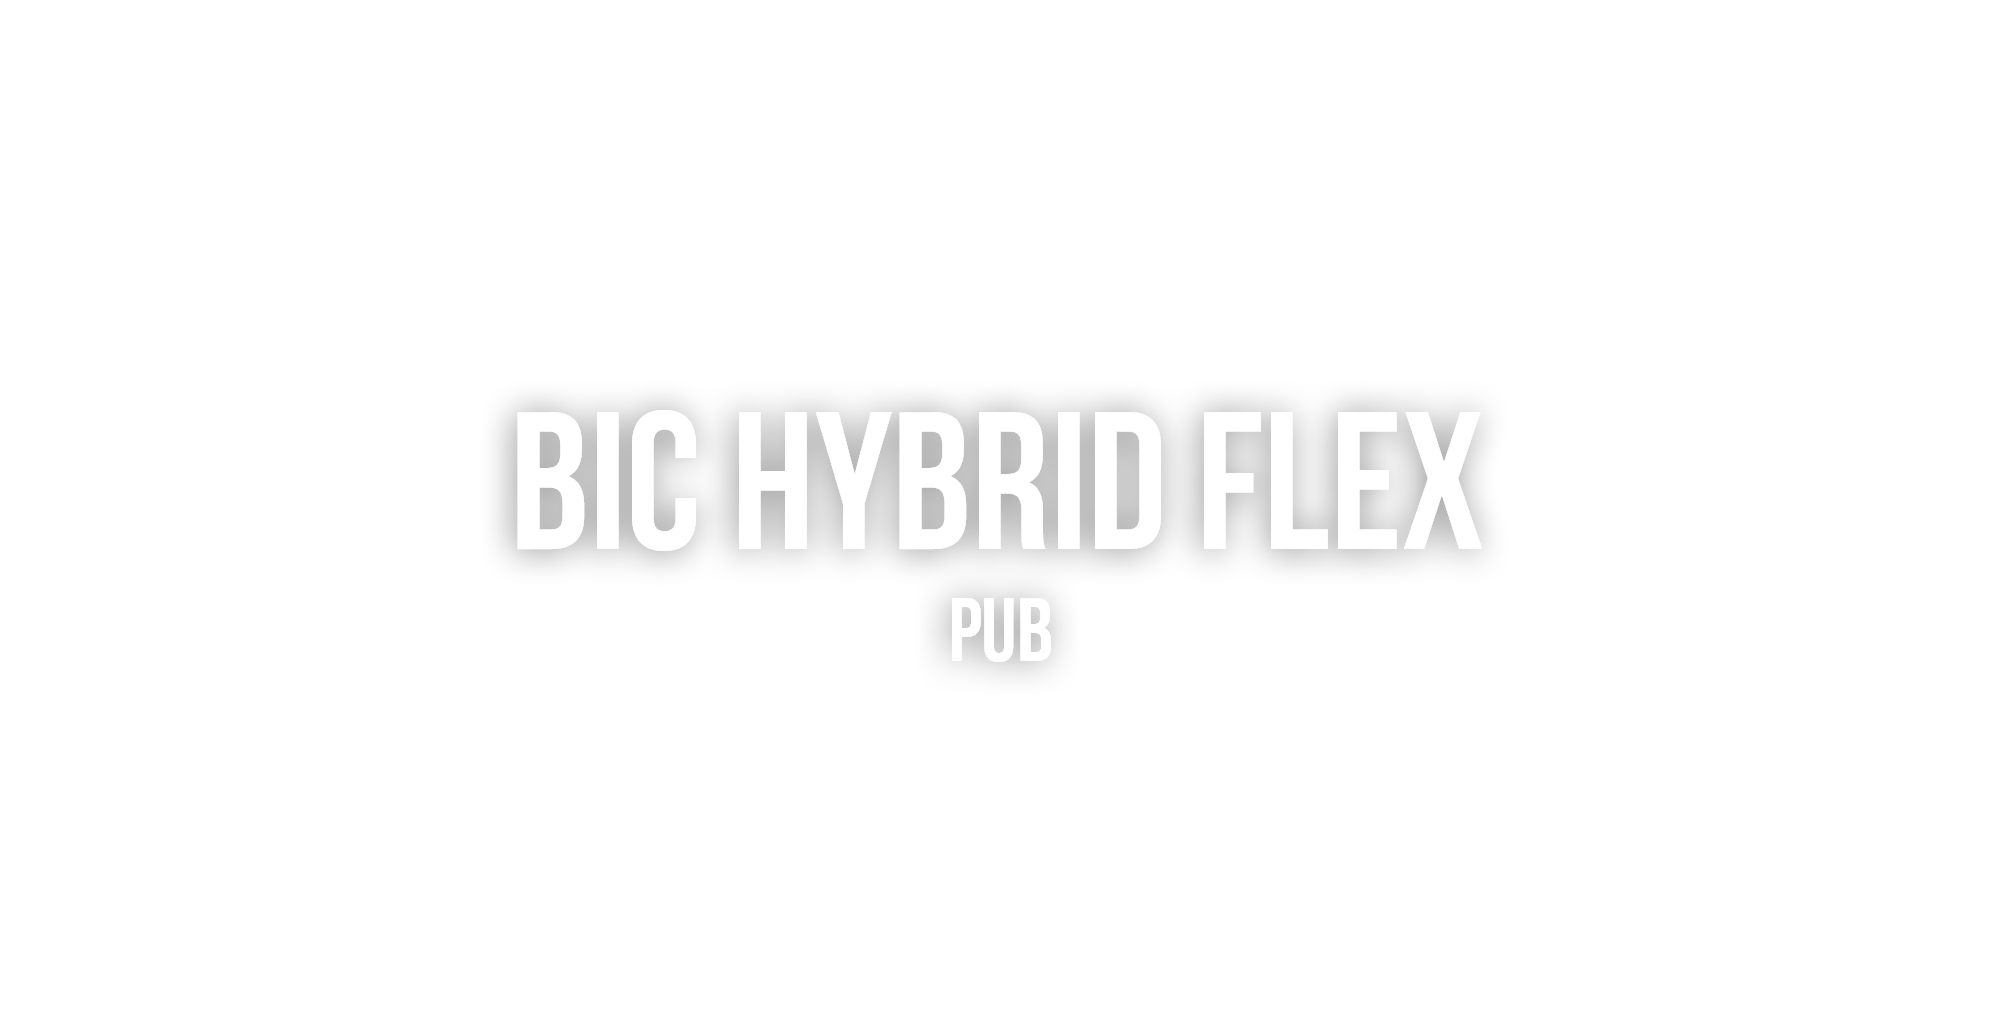 Bic Hybrid Flex